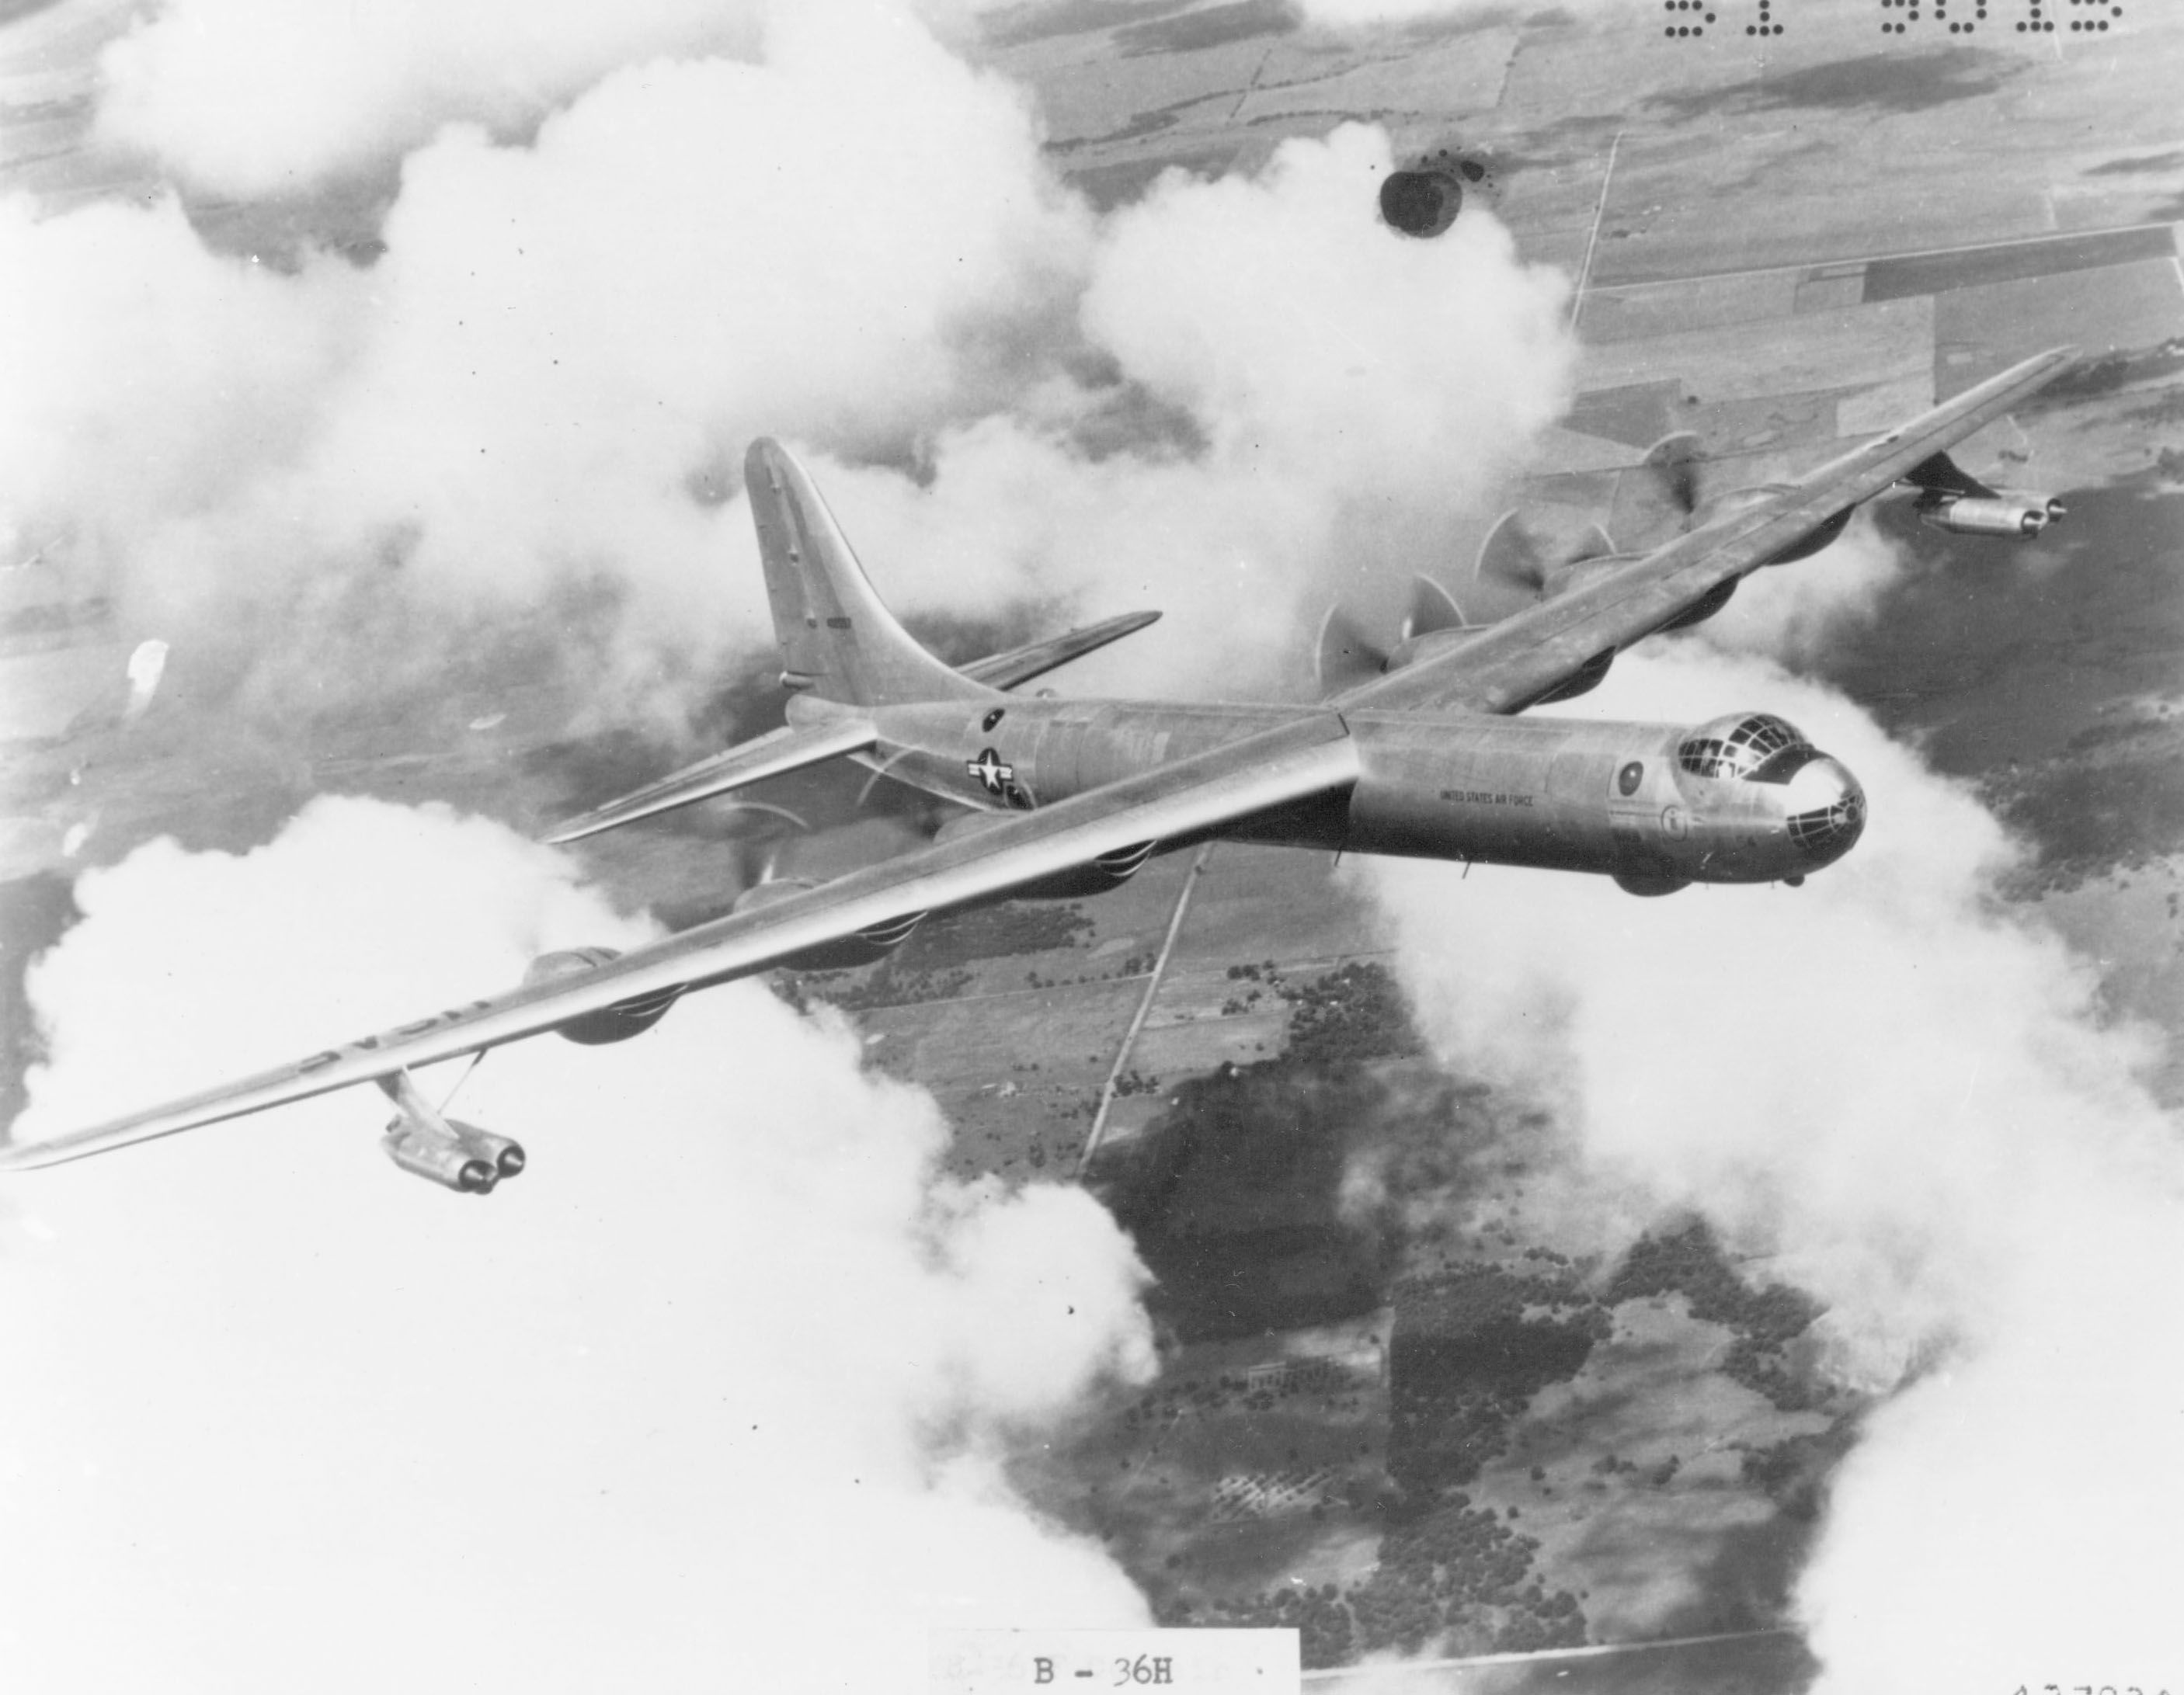 Flight Deck of a Convair B-36 'Peacemaker' Strategic Bomber[1562 x